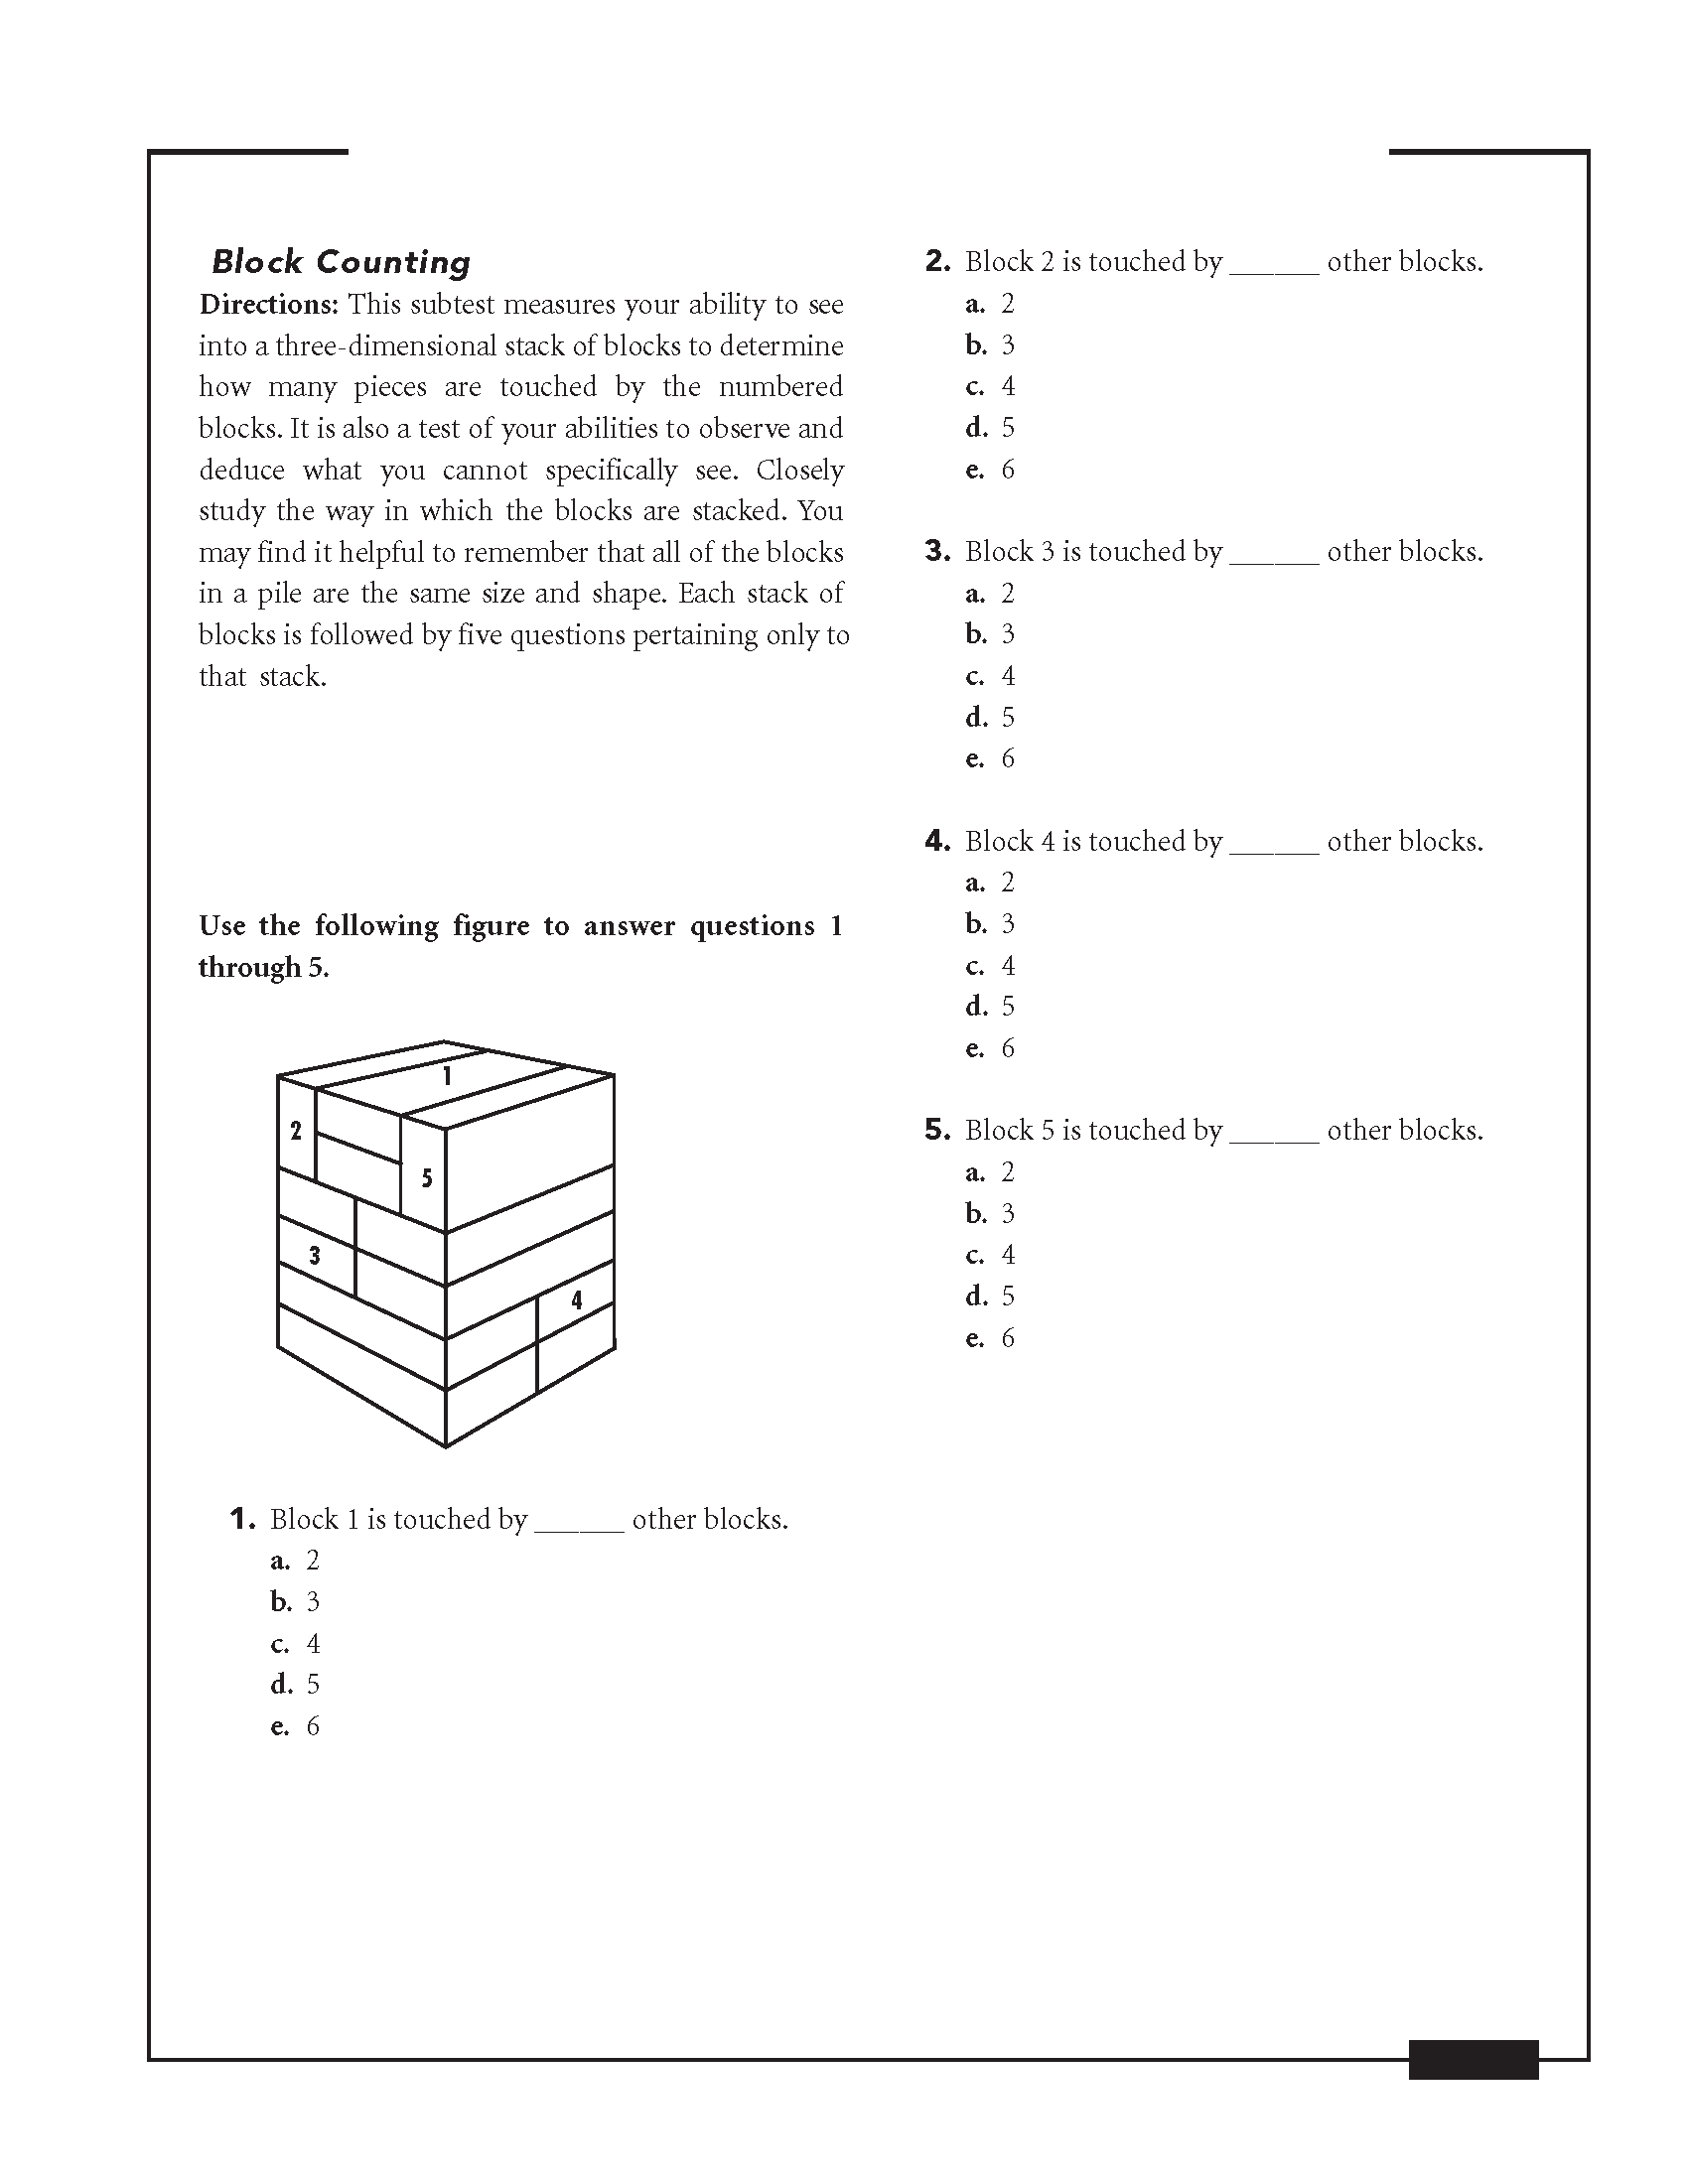 afoqt-block-counting-study-guide-afoqtguide